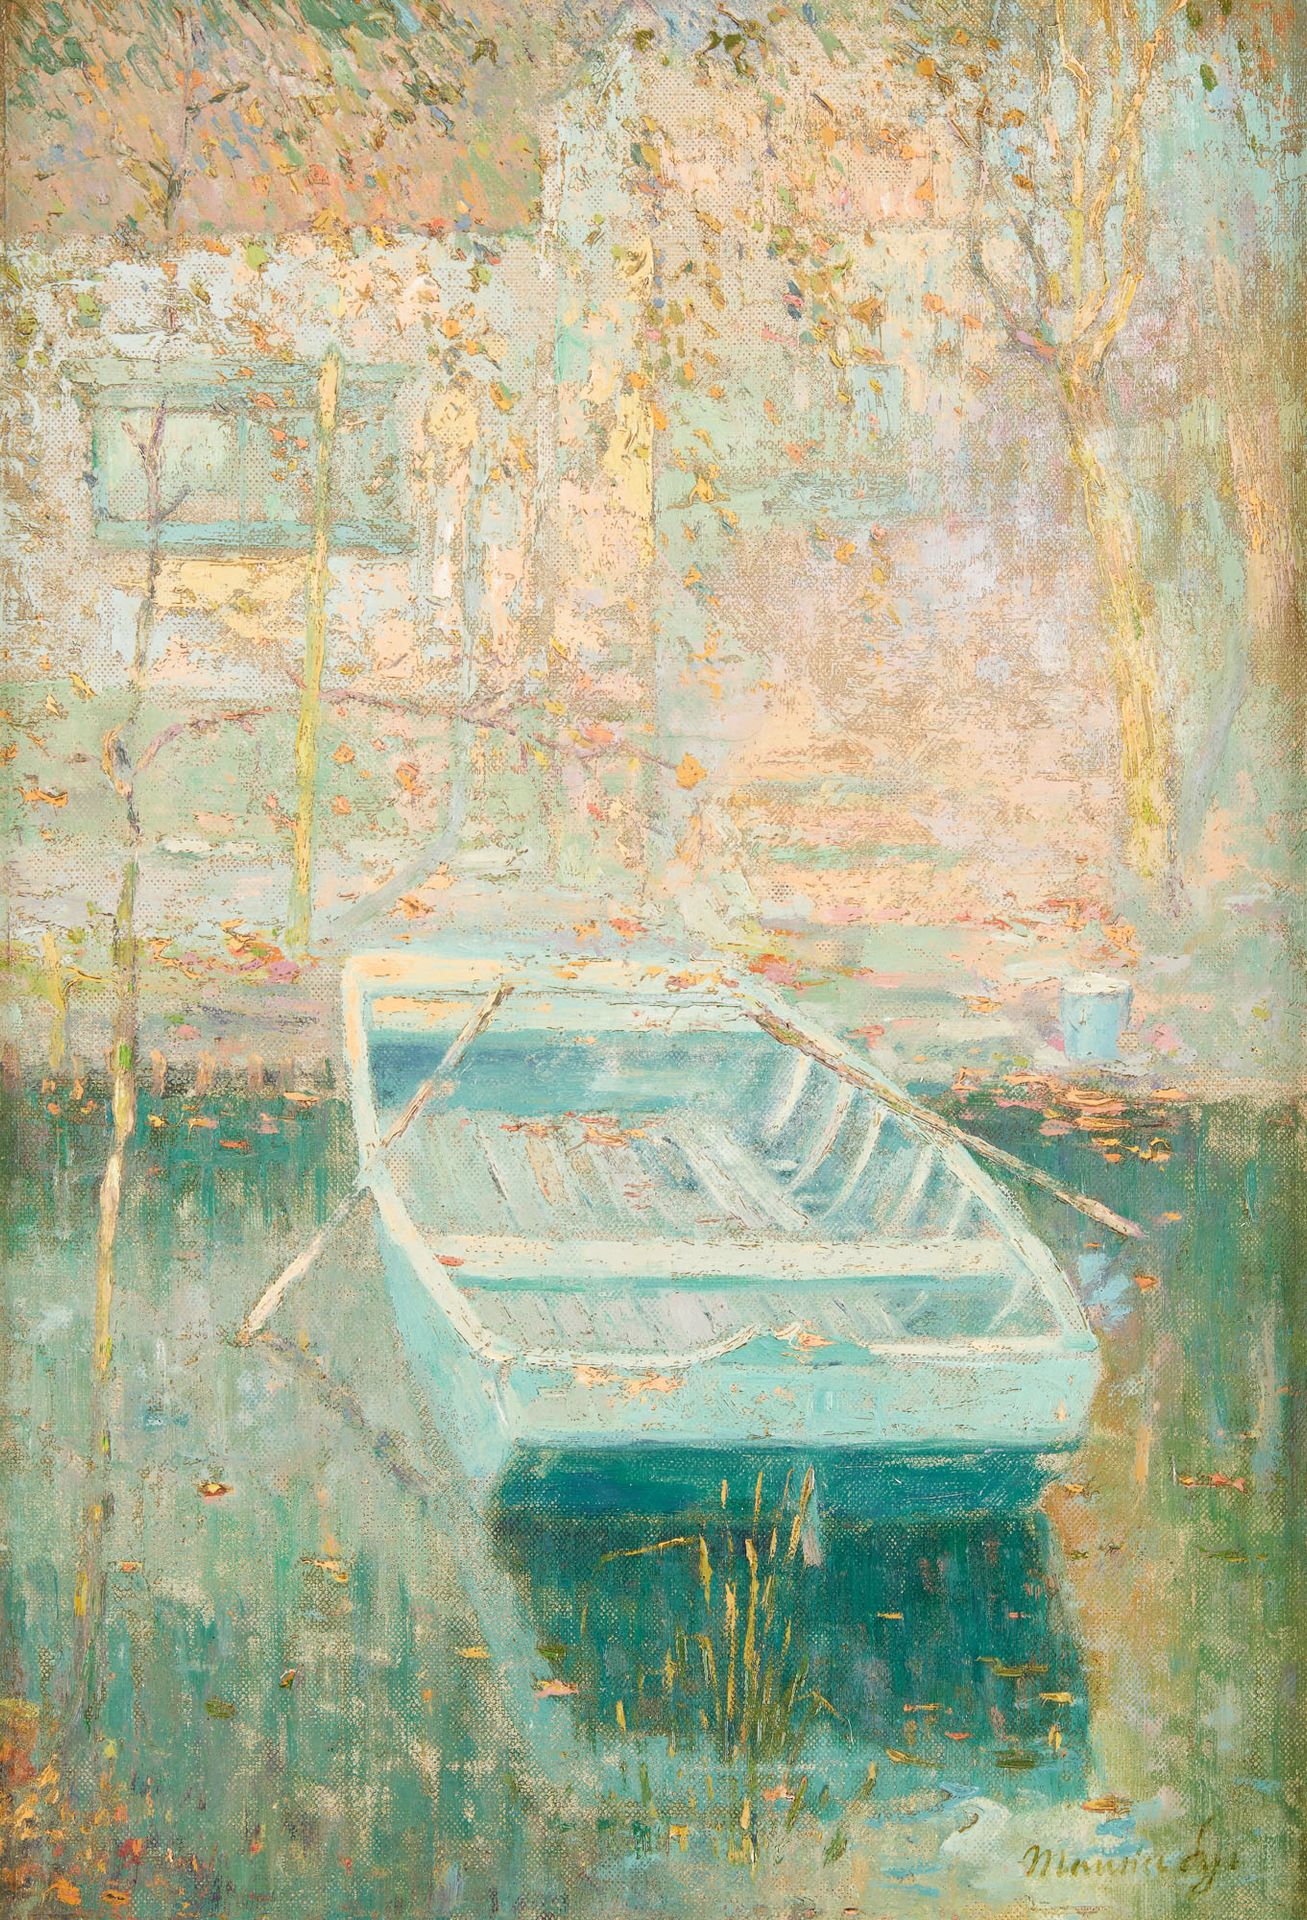 Maurice SYS École hollandaise (1880-1972) Óleo sobre lienzo: El barco amarrado.
&hellip;